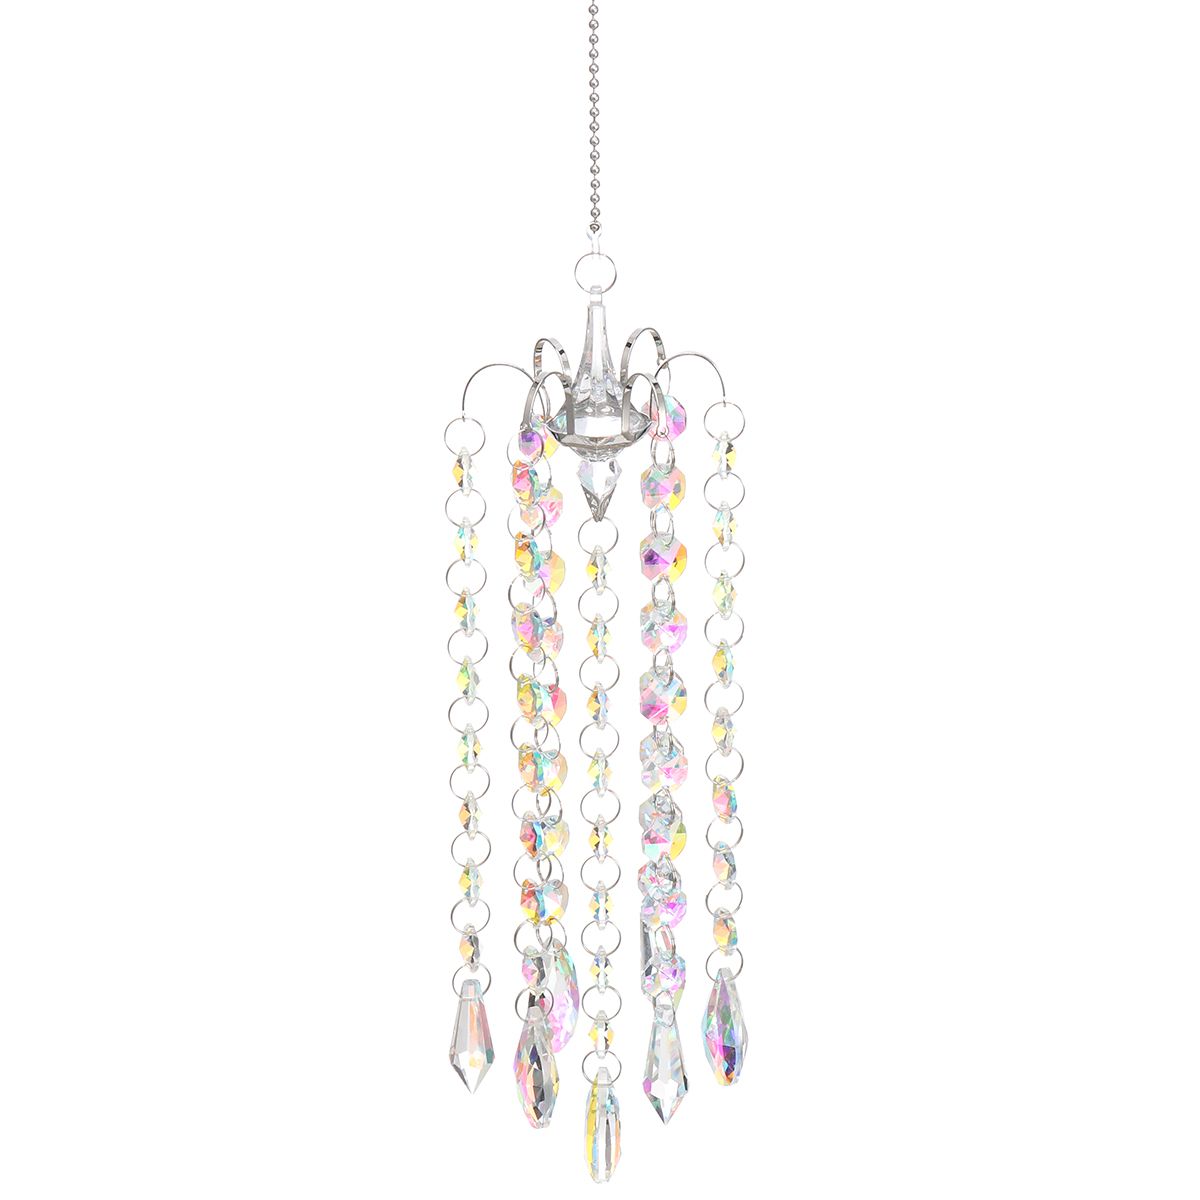 Crystal-Lighting-Ball-Pendant-Beads-Chandelier-Hanging-Drop-Prisms-Suncatcher-1674742